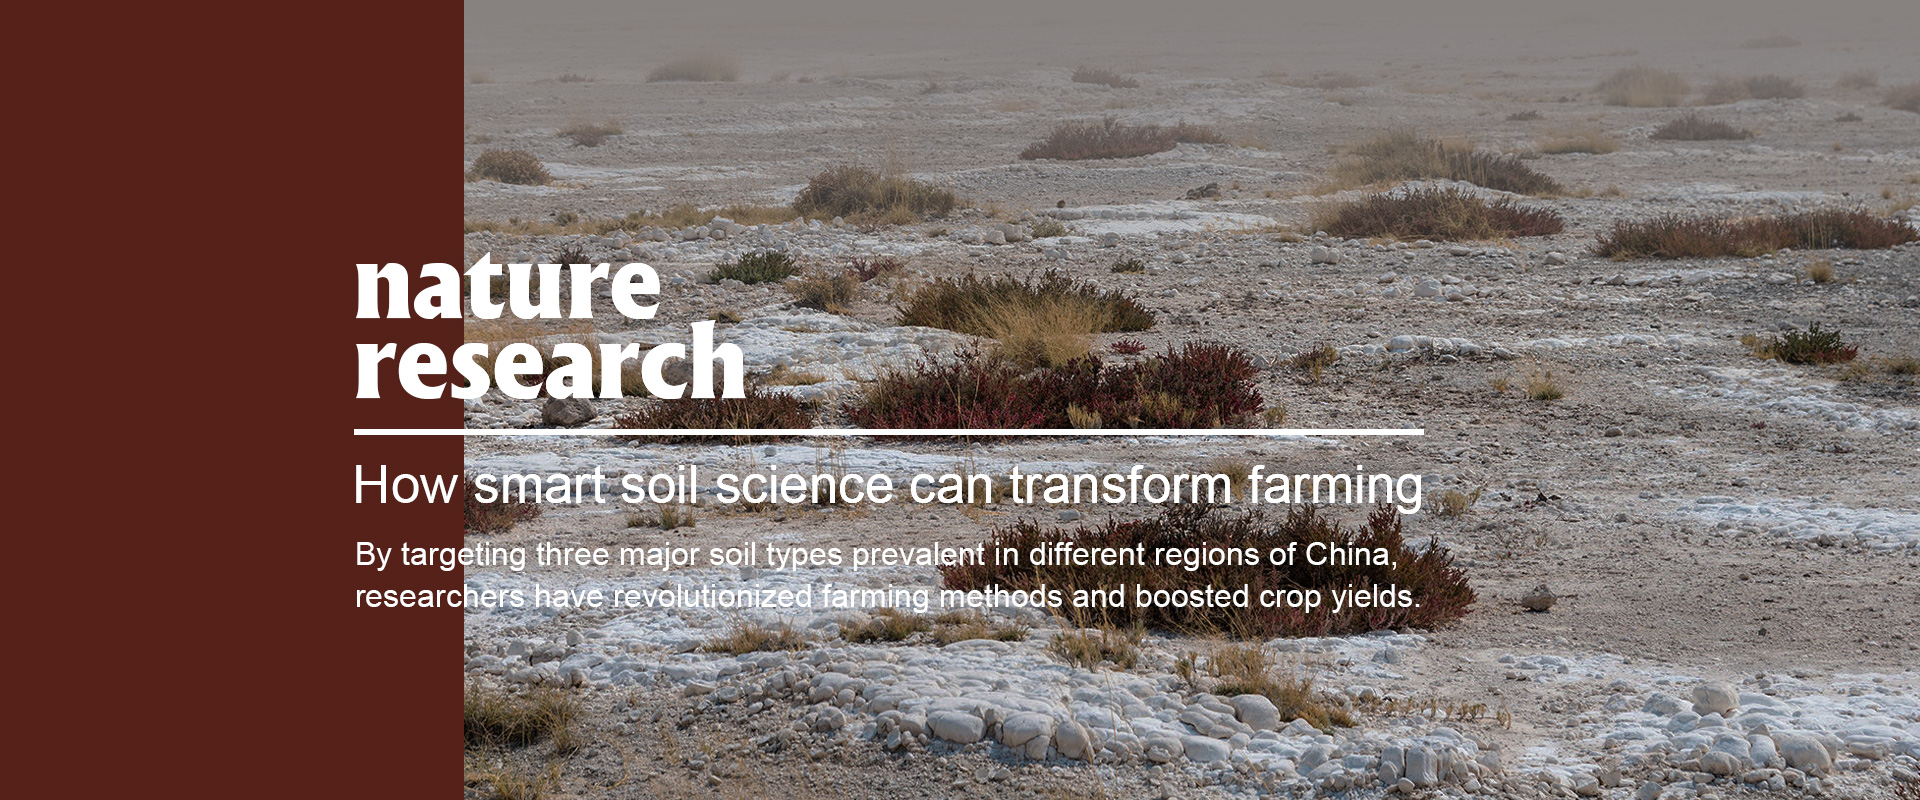 How smart soil science can transform farming